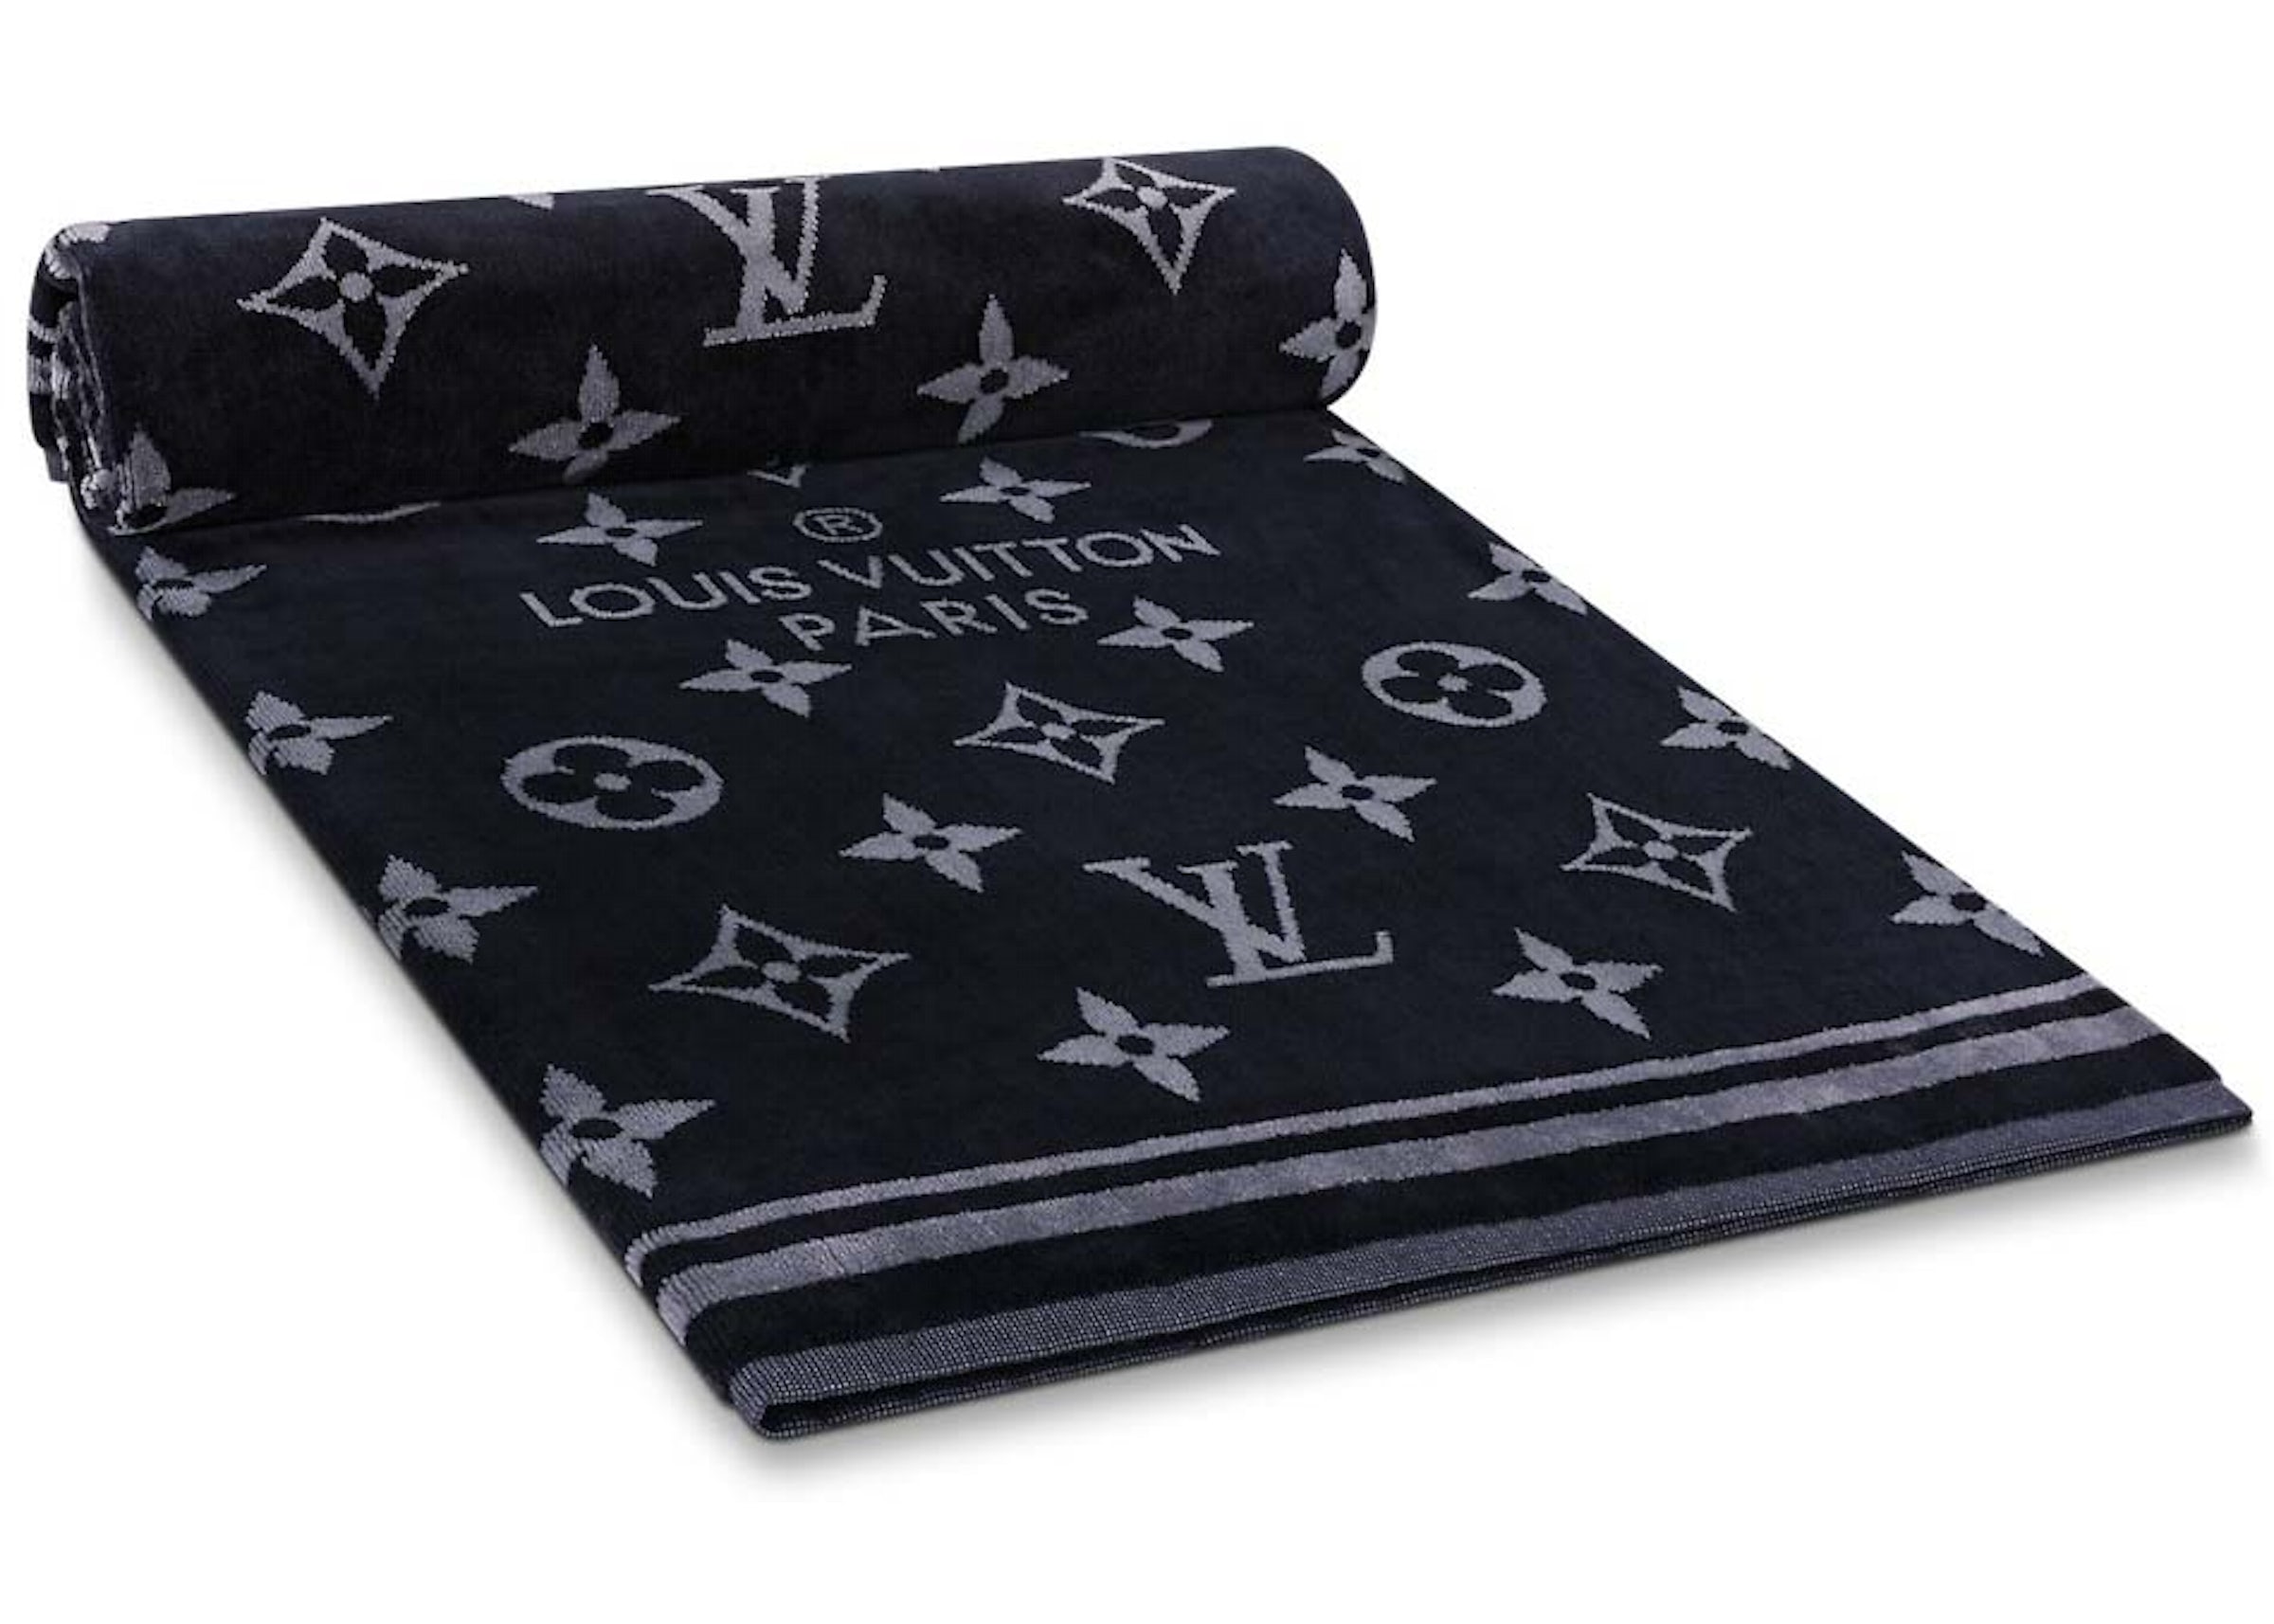 Louis Vuitton Monogram Eclipse Beach Towel Black in Jacquared Weave - US